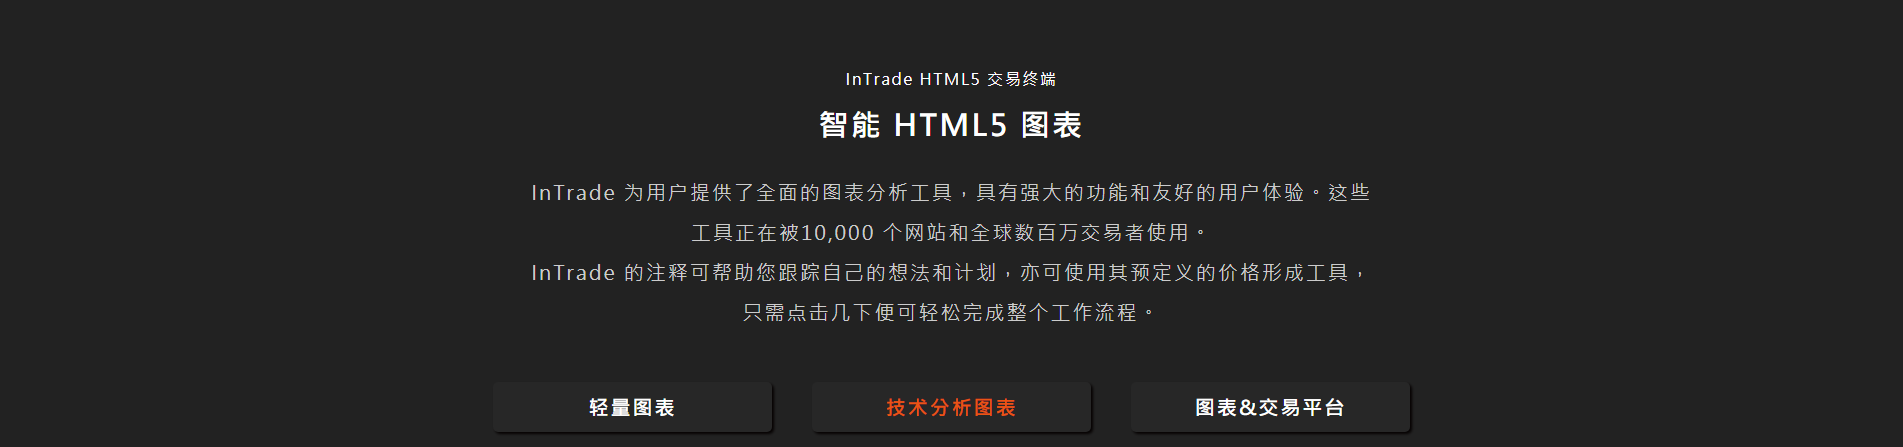 HTML5 交易终端